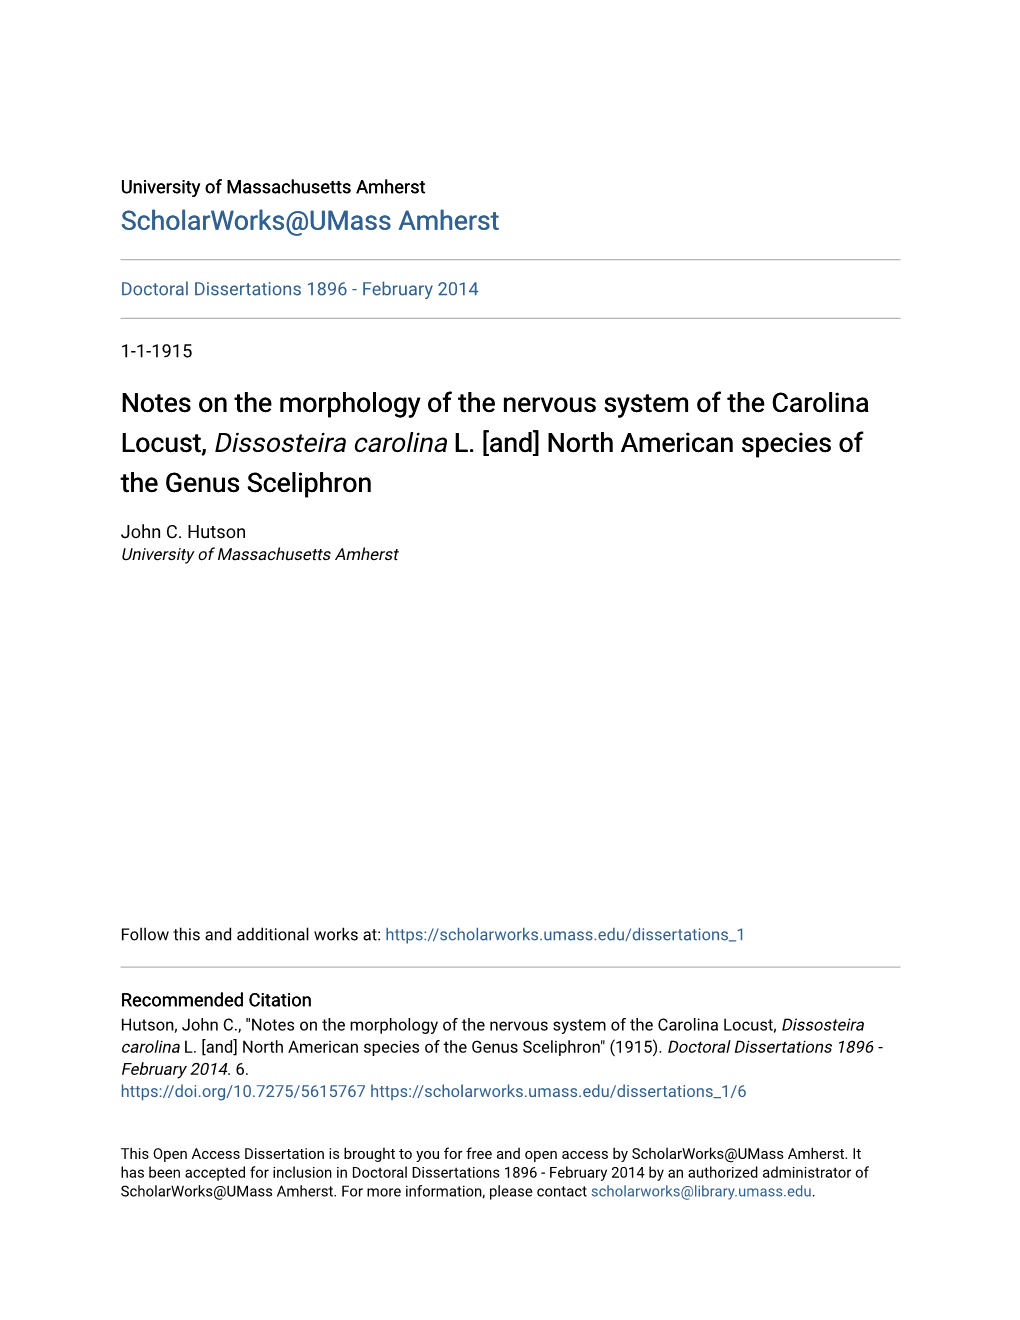 Notes on the Morphology of the Nervous System of the Carolina Locust, Dissosteira Carolina L